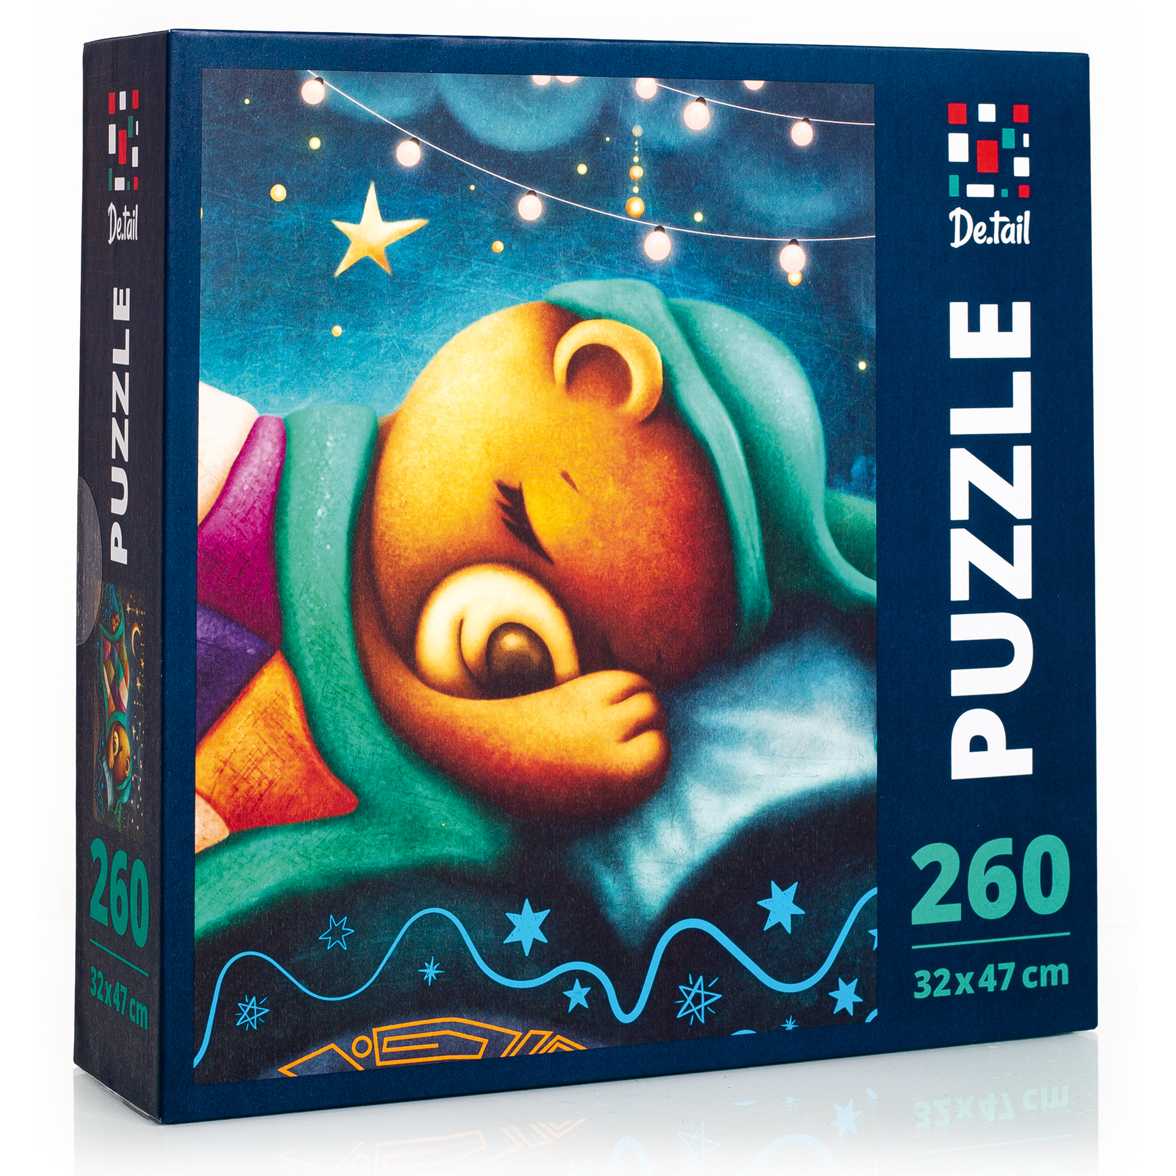 Puzzle Sleeping bear, 32x47 cm, 260 piese De.tail DT200-01